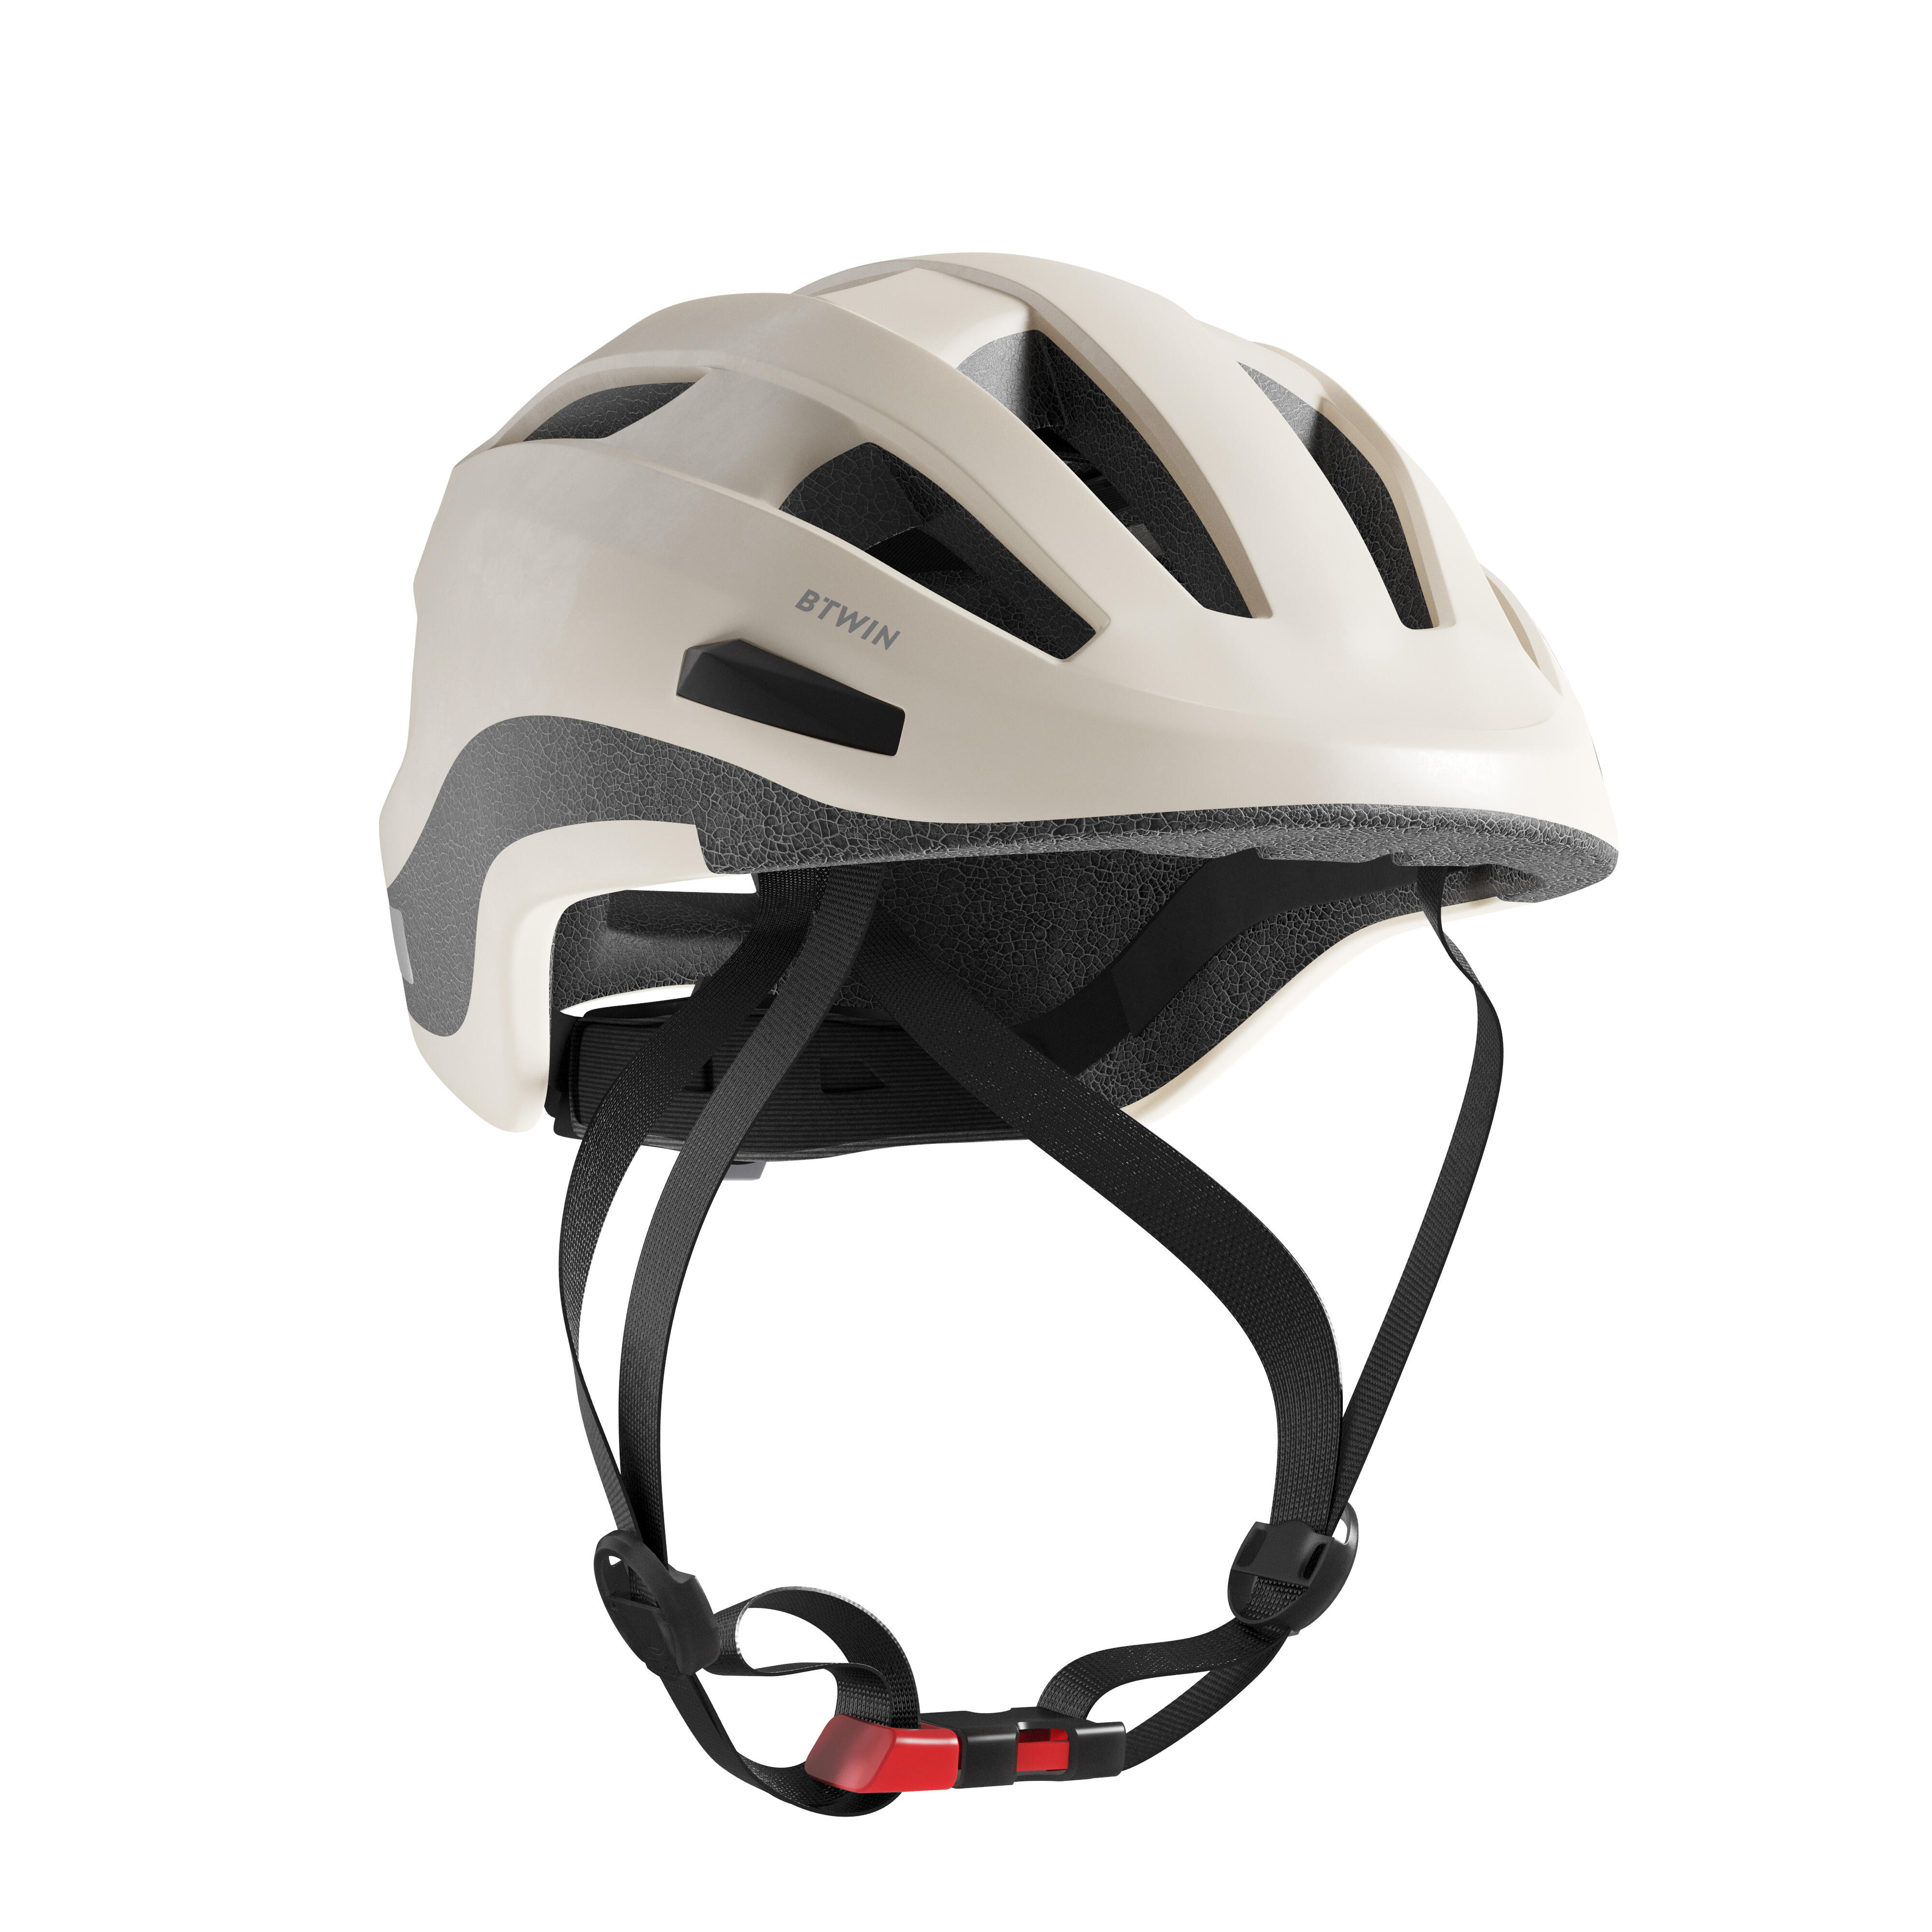 Decathlon UK Btwin City Cycling Helmet 500